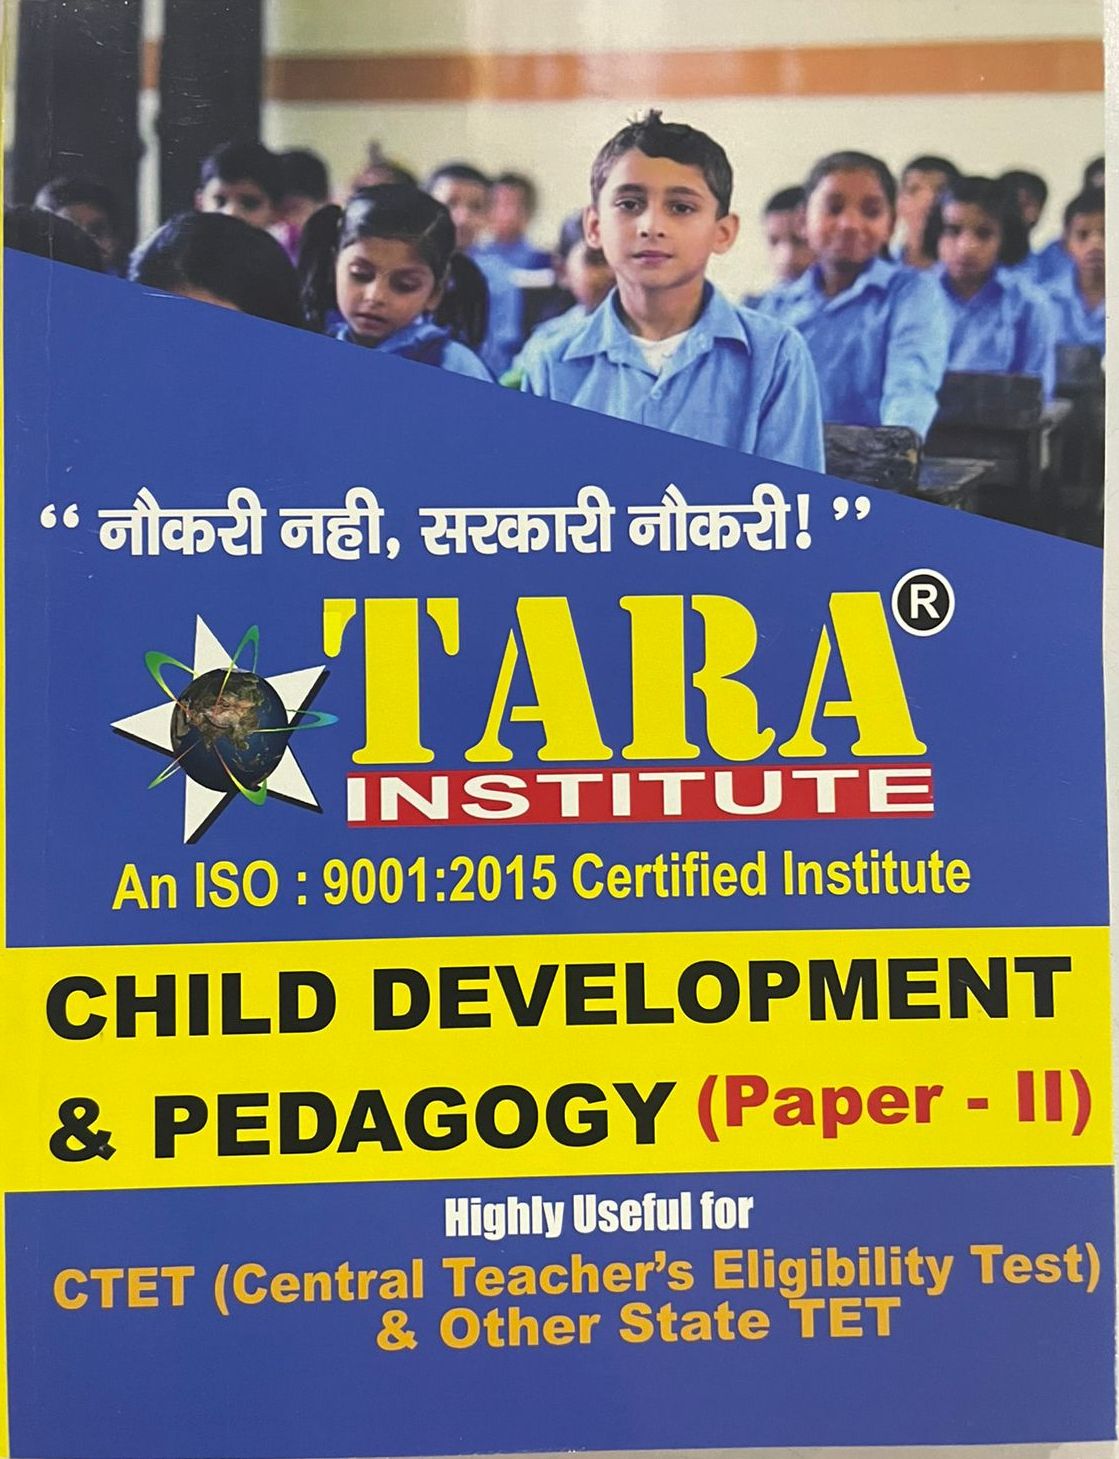 Child Development & Pedagogy